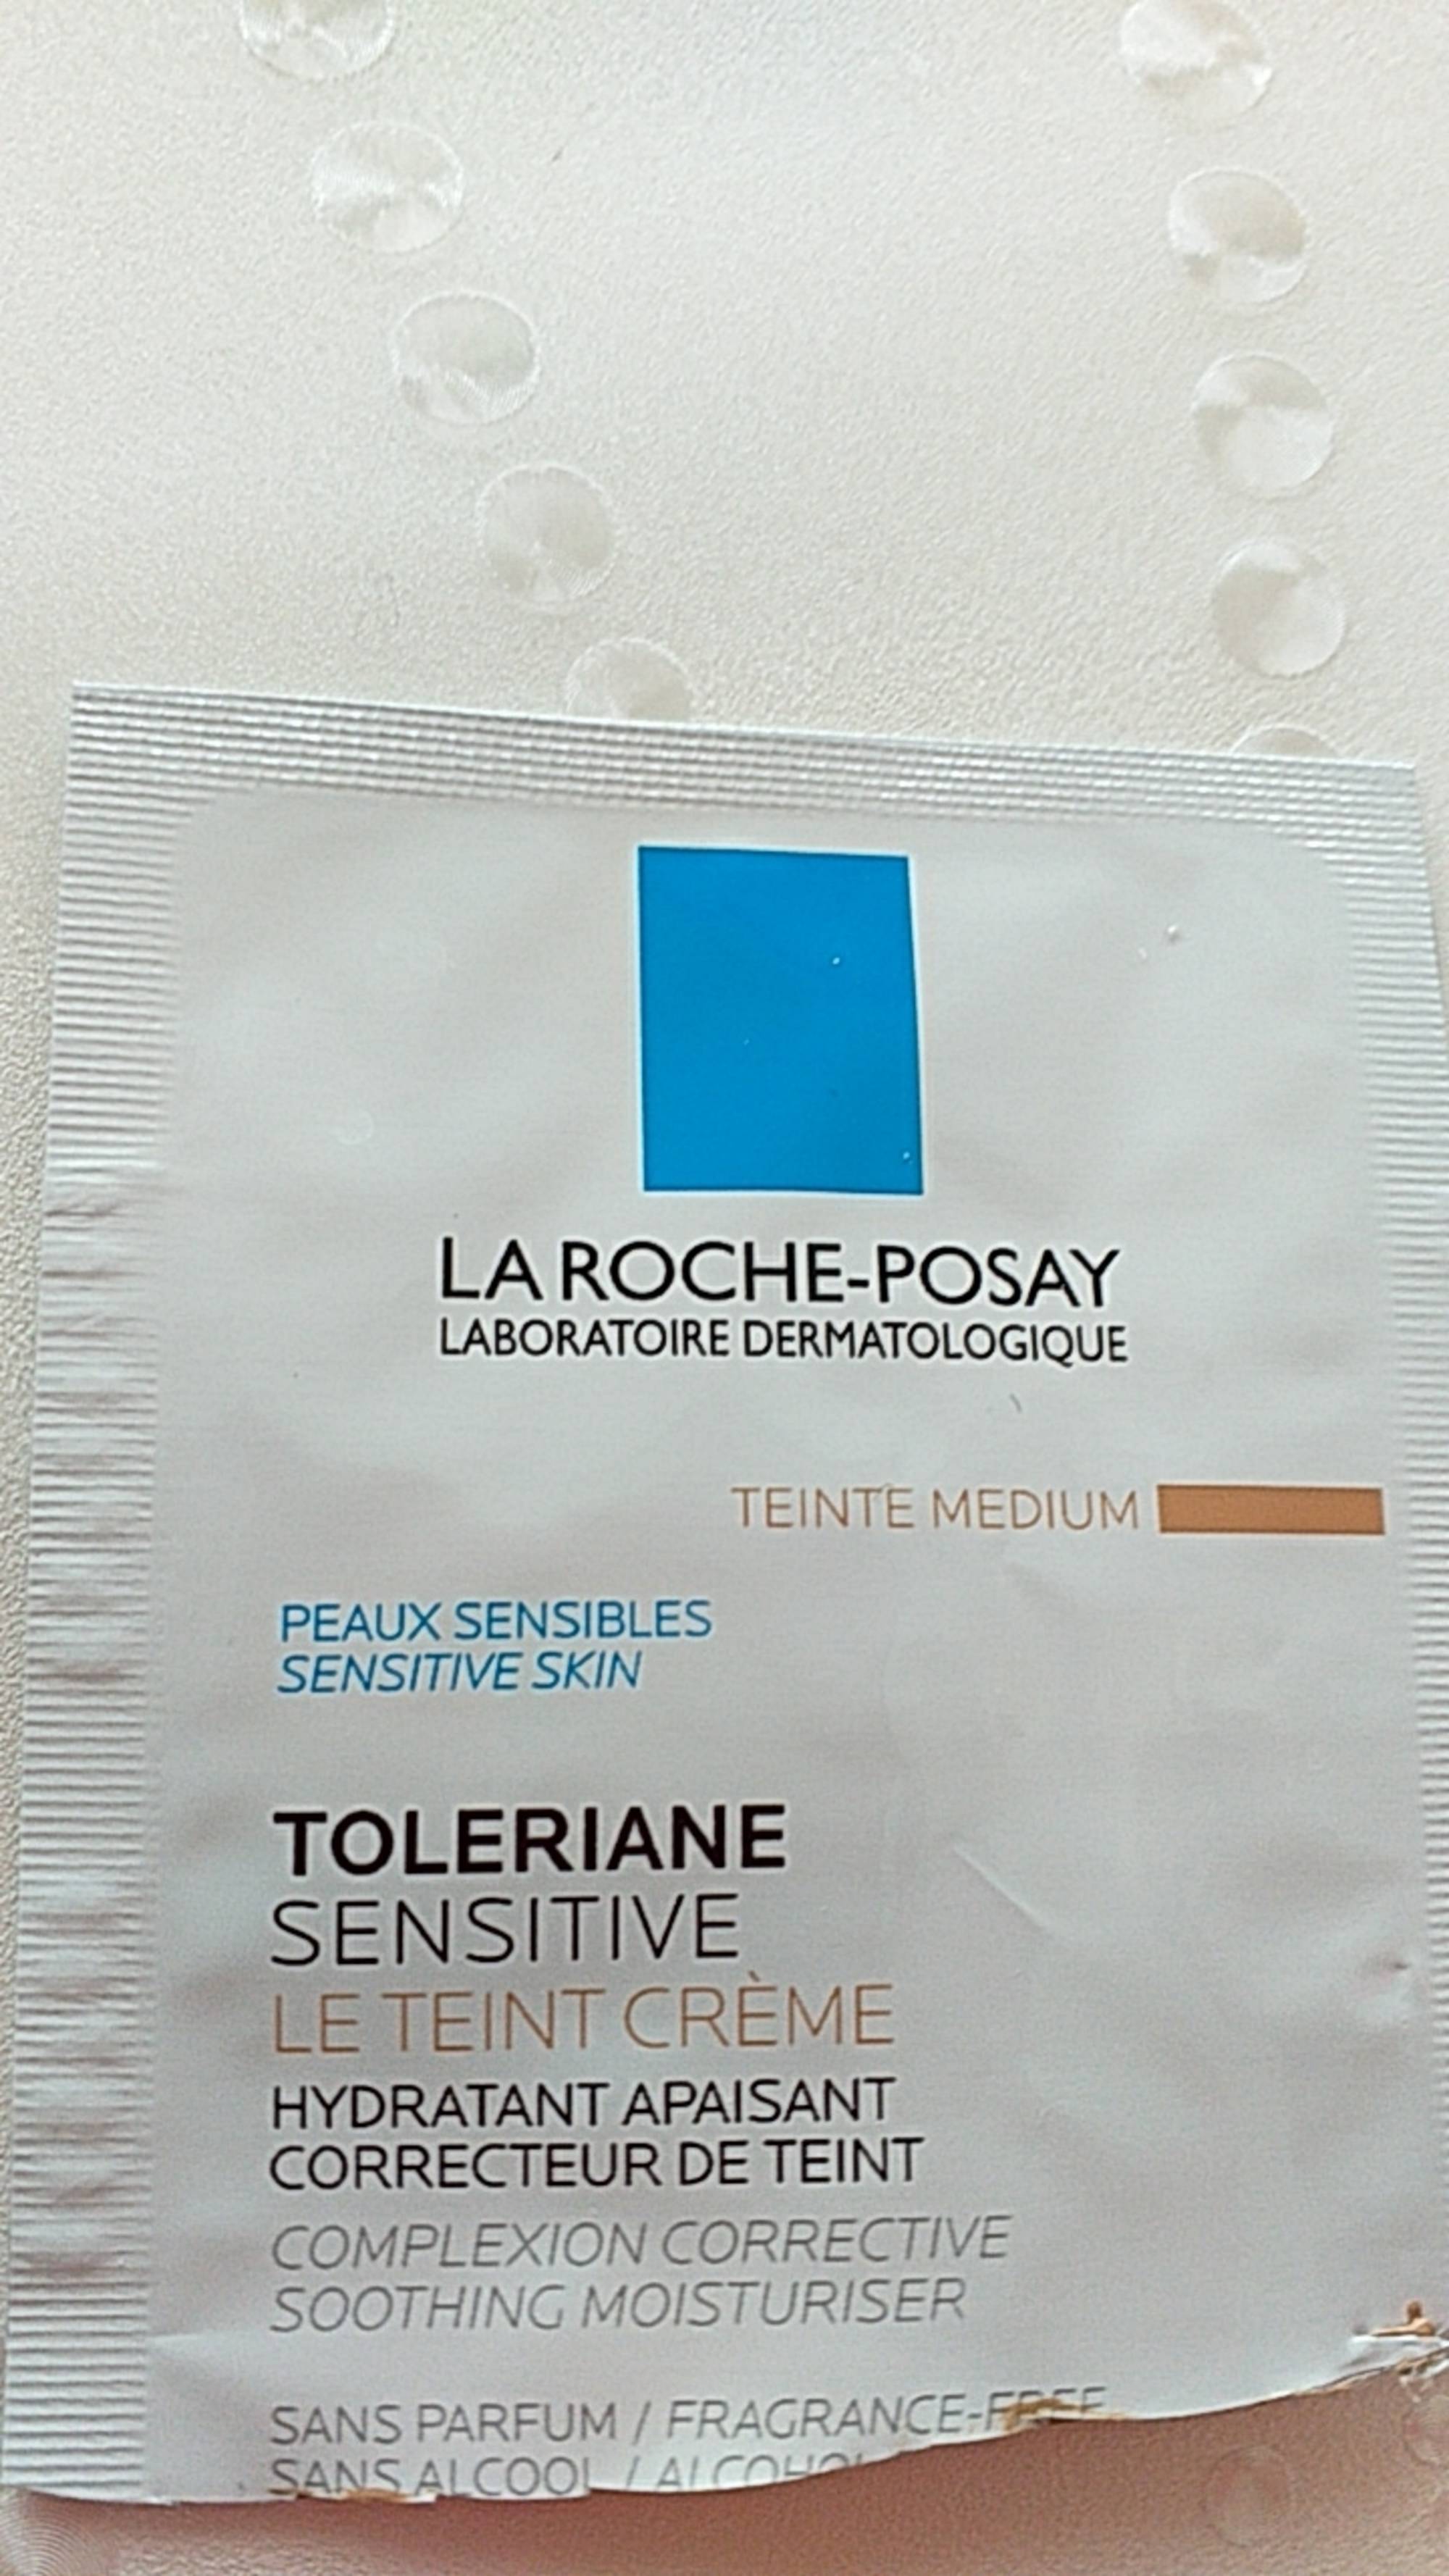 LA ROCHE-POSAY - Toleriane sensitive - Le teint crème